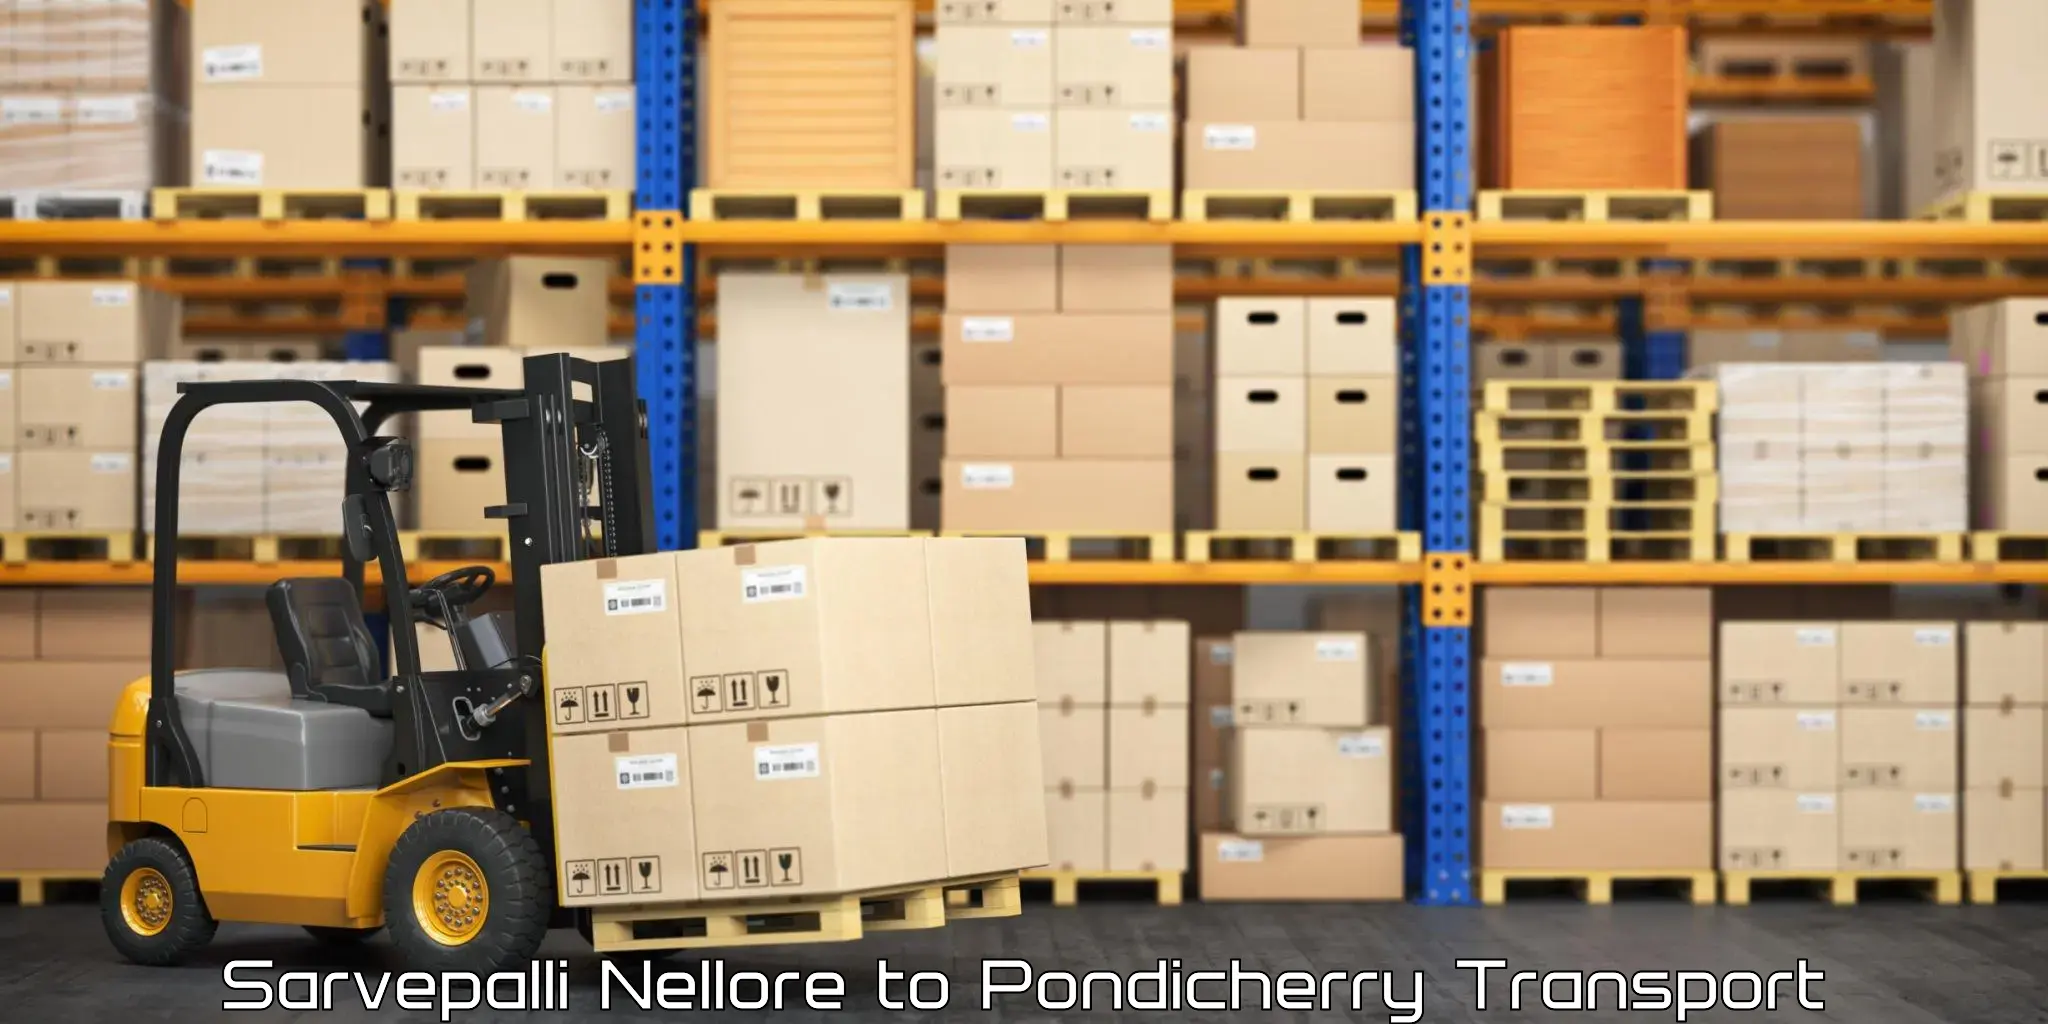 Two wheeler parcel service Sarvepalli Nellore to Pondicherry